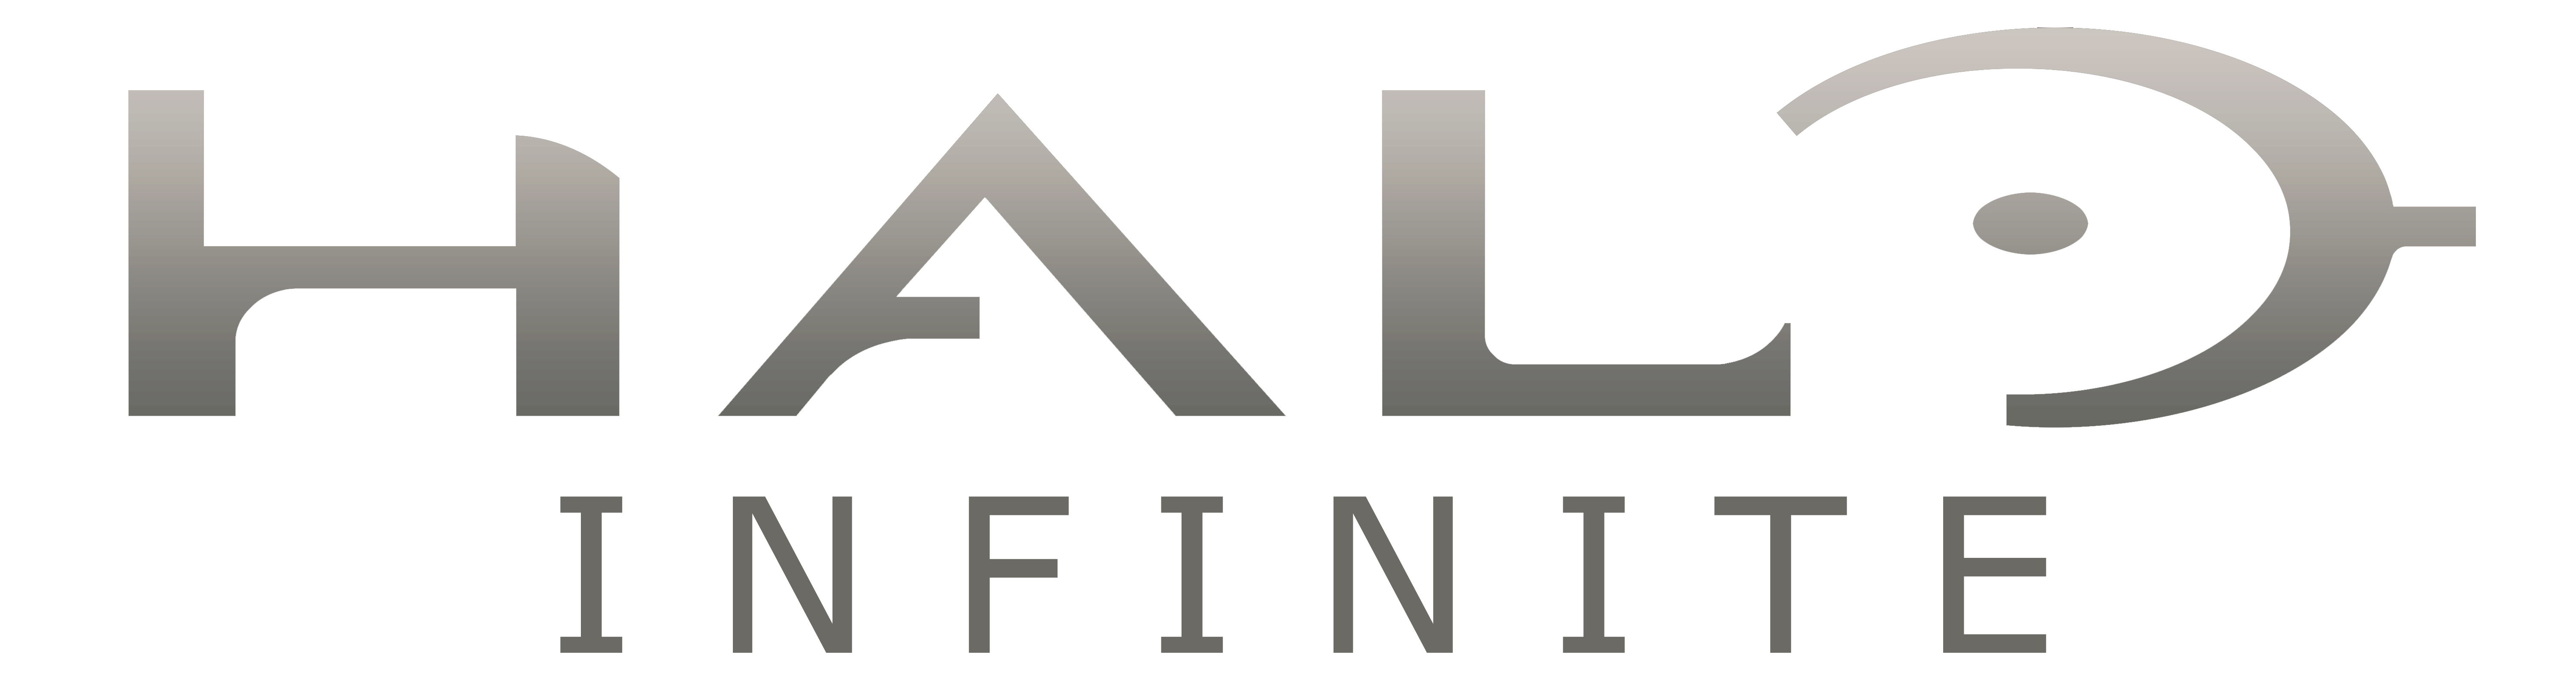 Halo Logo - File:Halo-Infinite-Logo.png - Wikimedia Commons